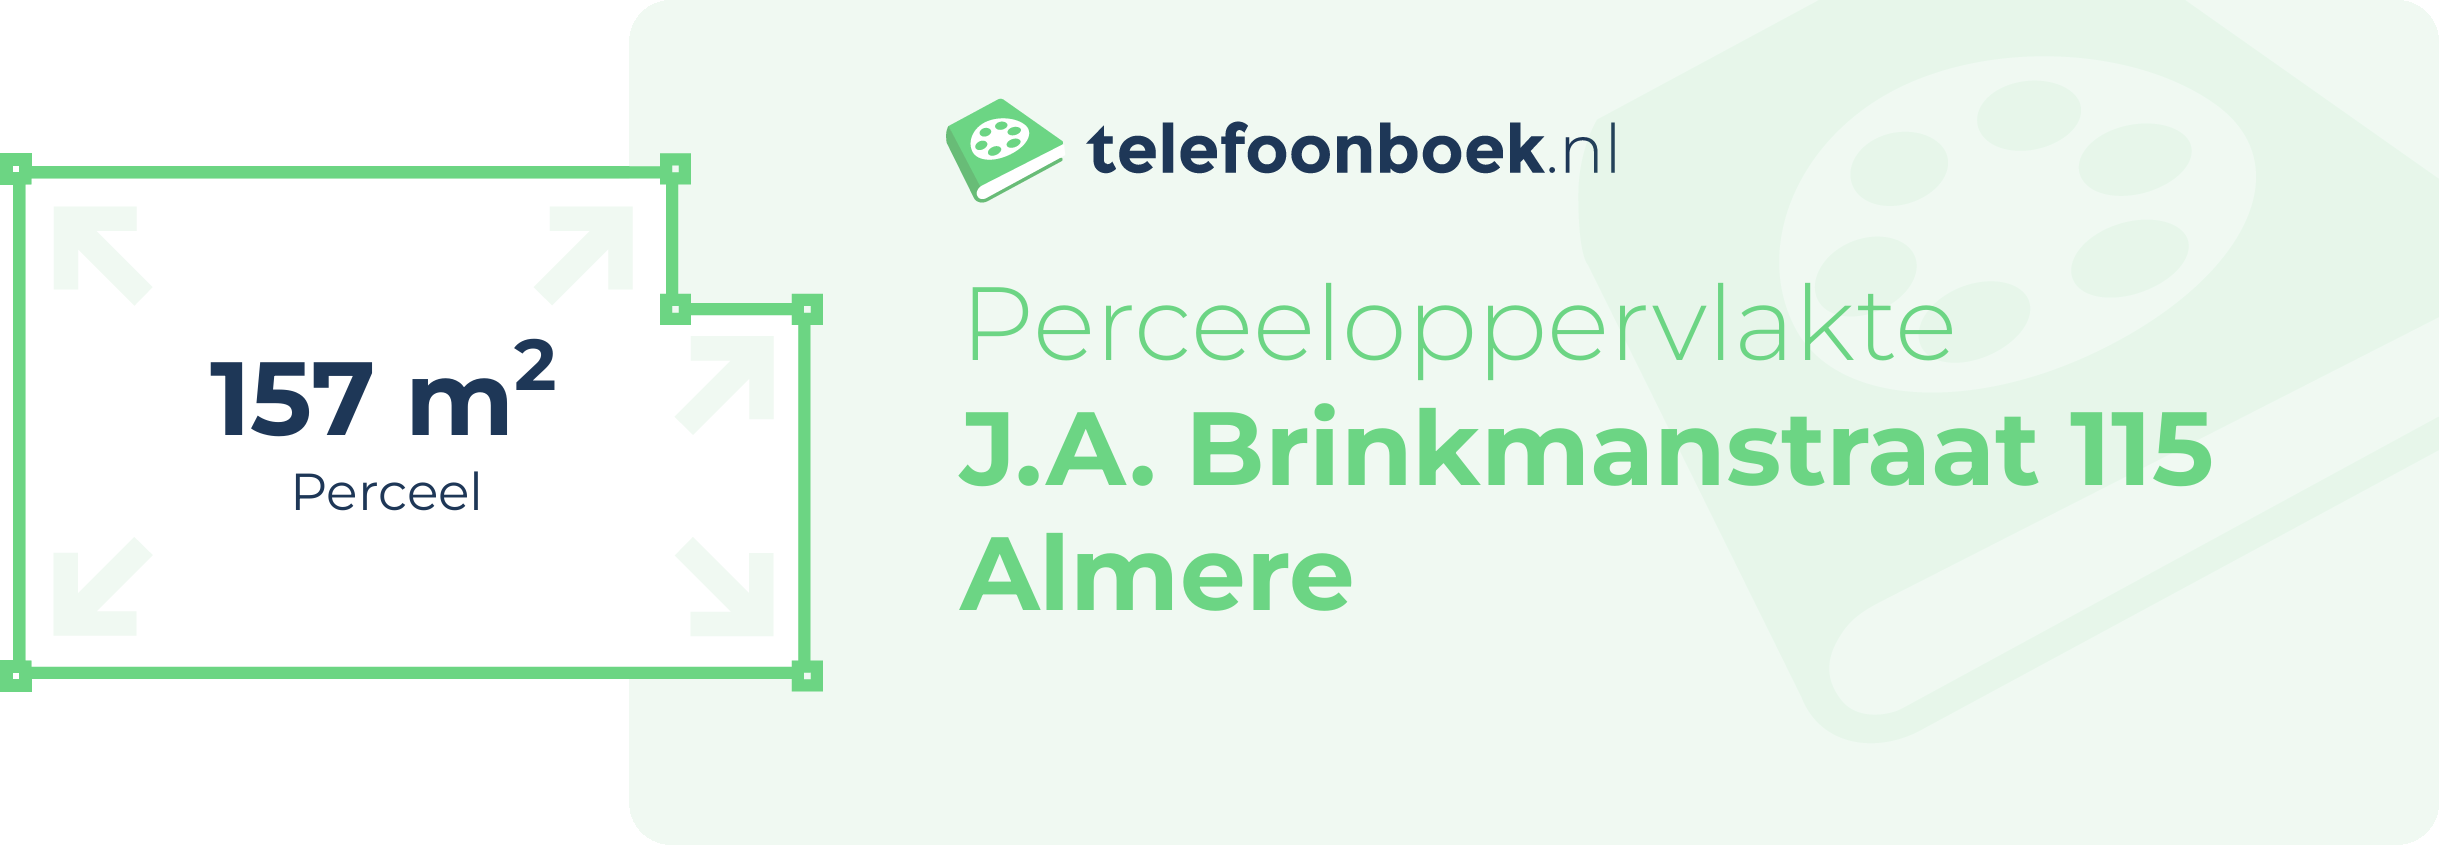 Perceeloppervlakte J.A. Brinkmanstraat 115 Almere